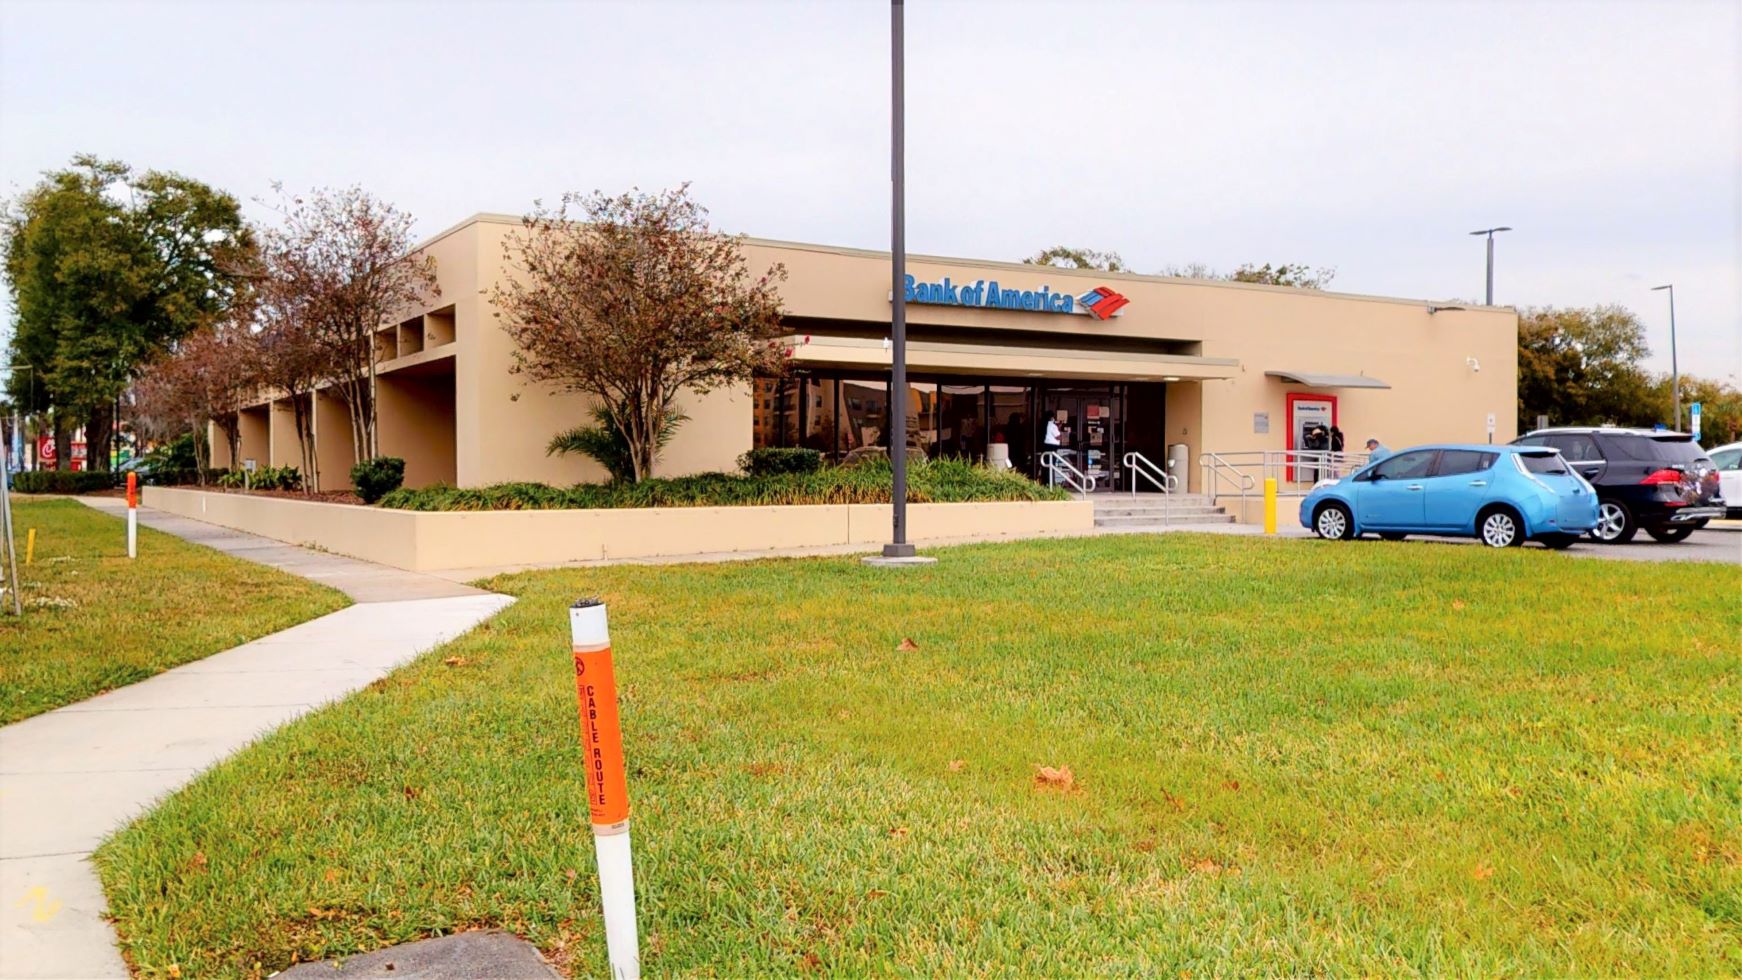 Bank of America financial center with drive-thru ATM | 2893 S Orange Ave, Orlando, FL 32806